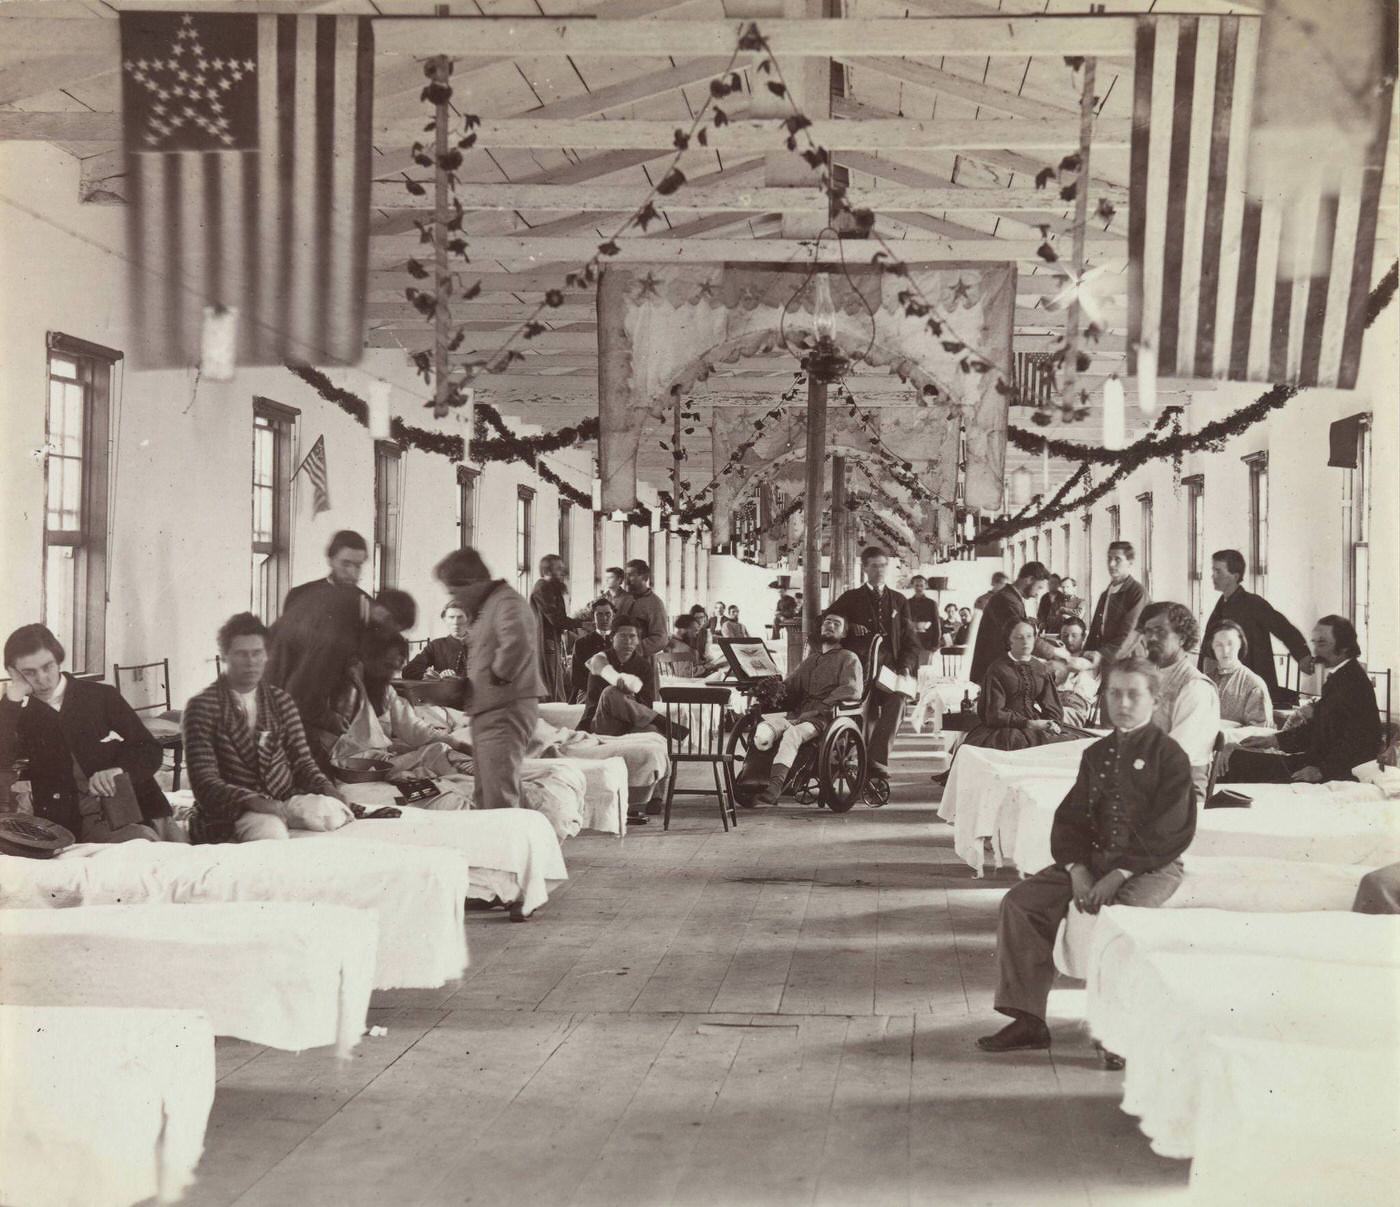 Armory Square Hospital, Washington, D.C., 1863